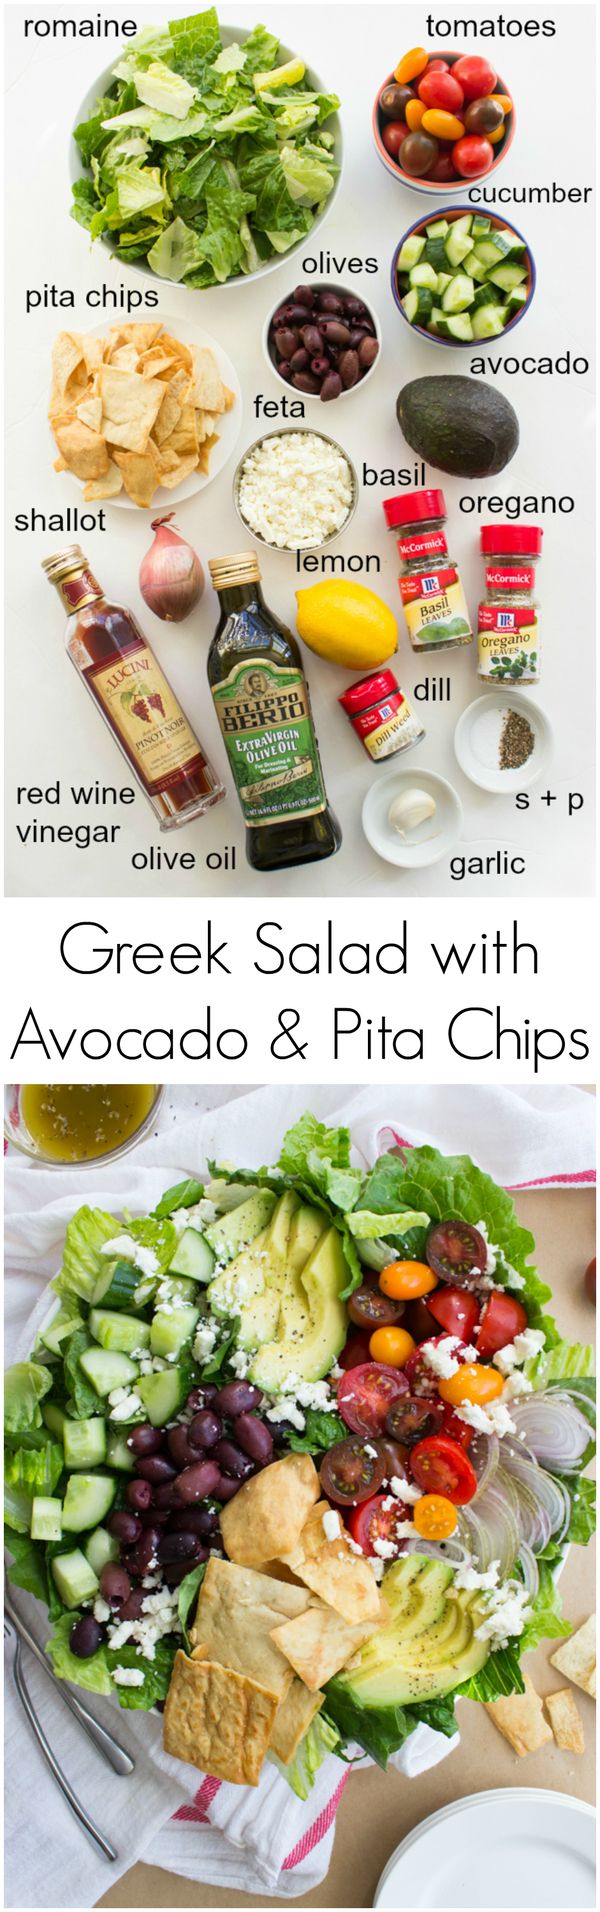 Greek Salad with Avocado and Pita Chips